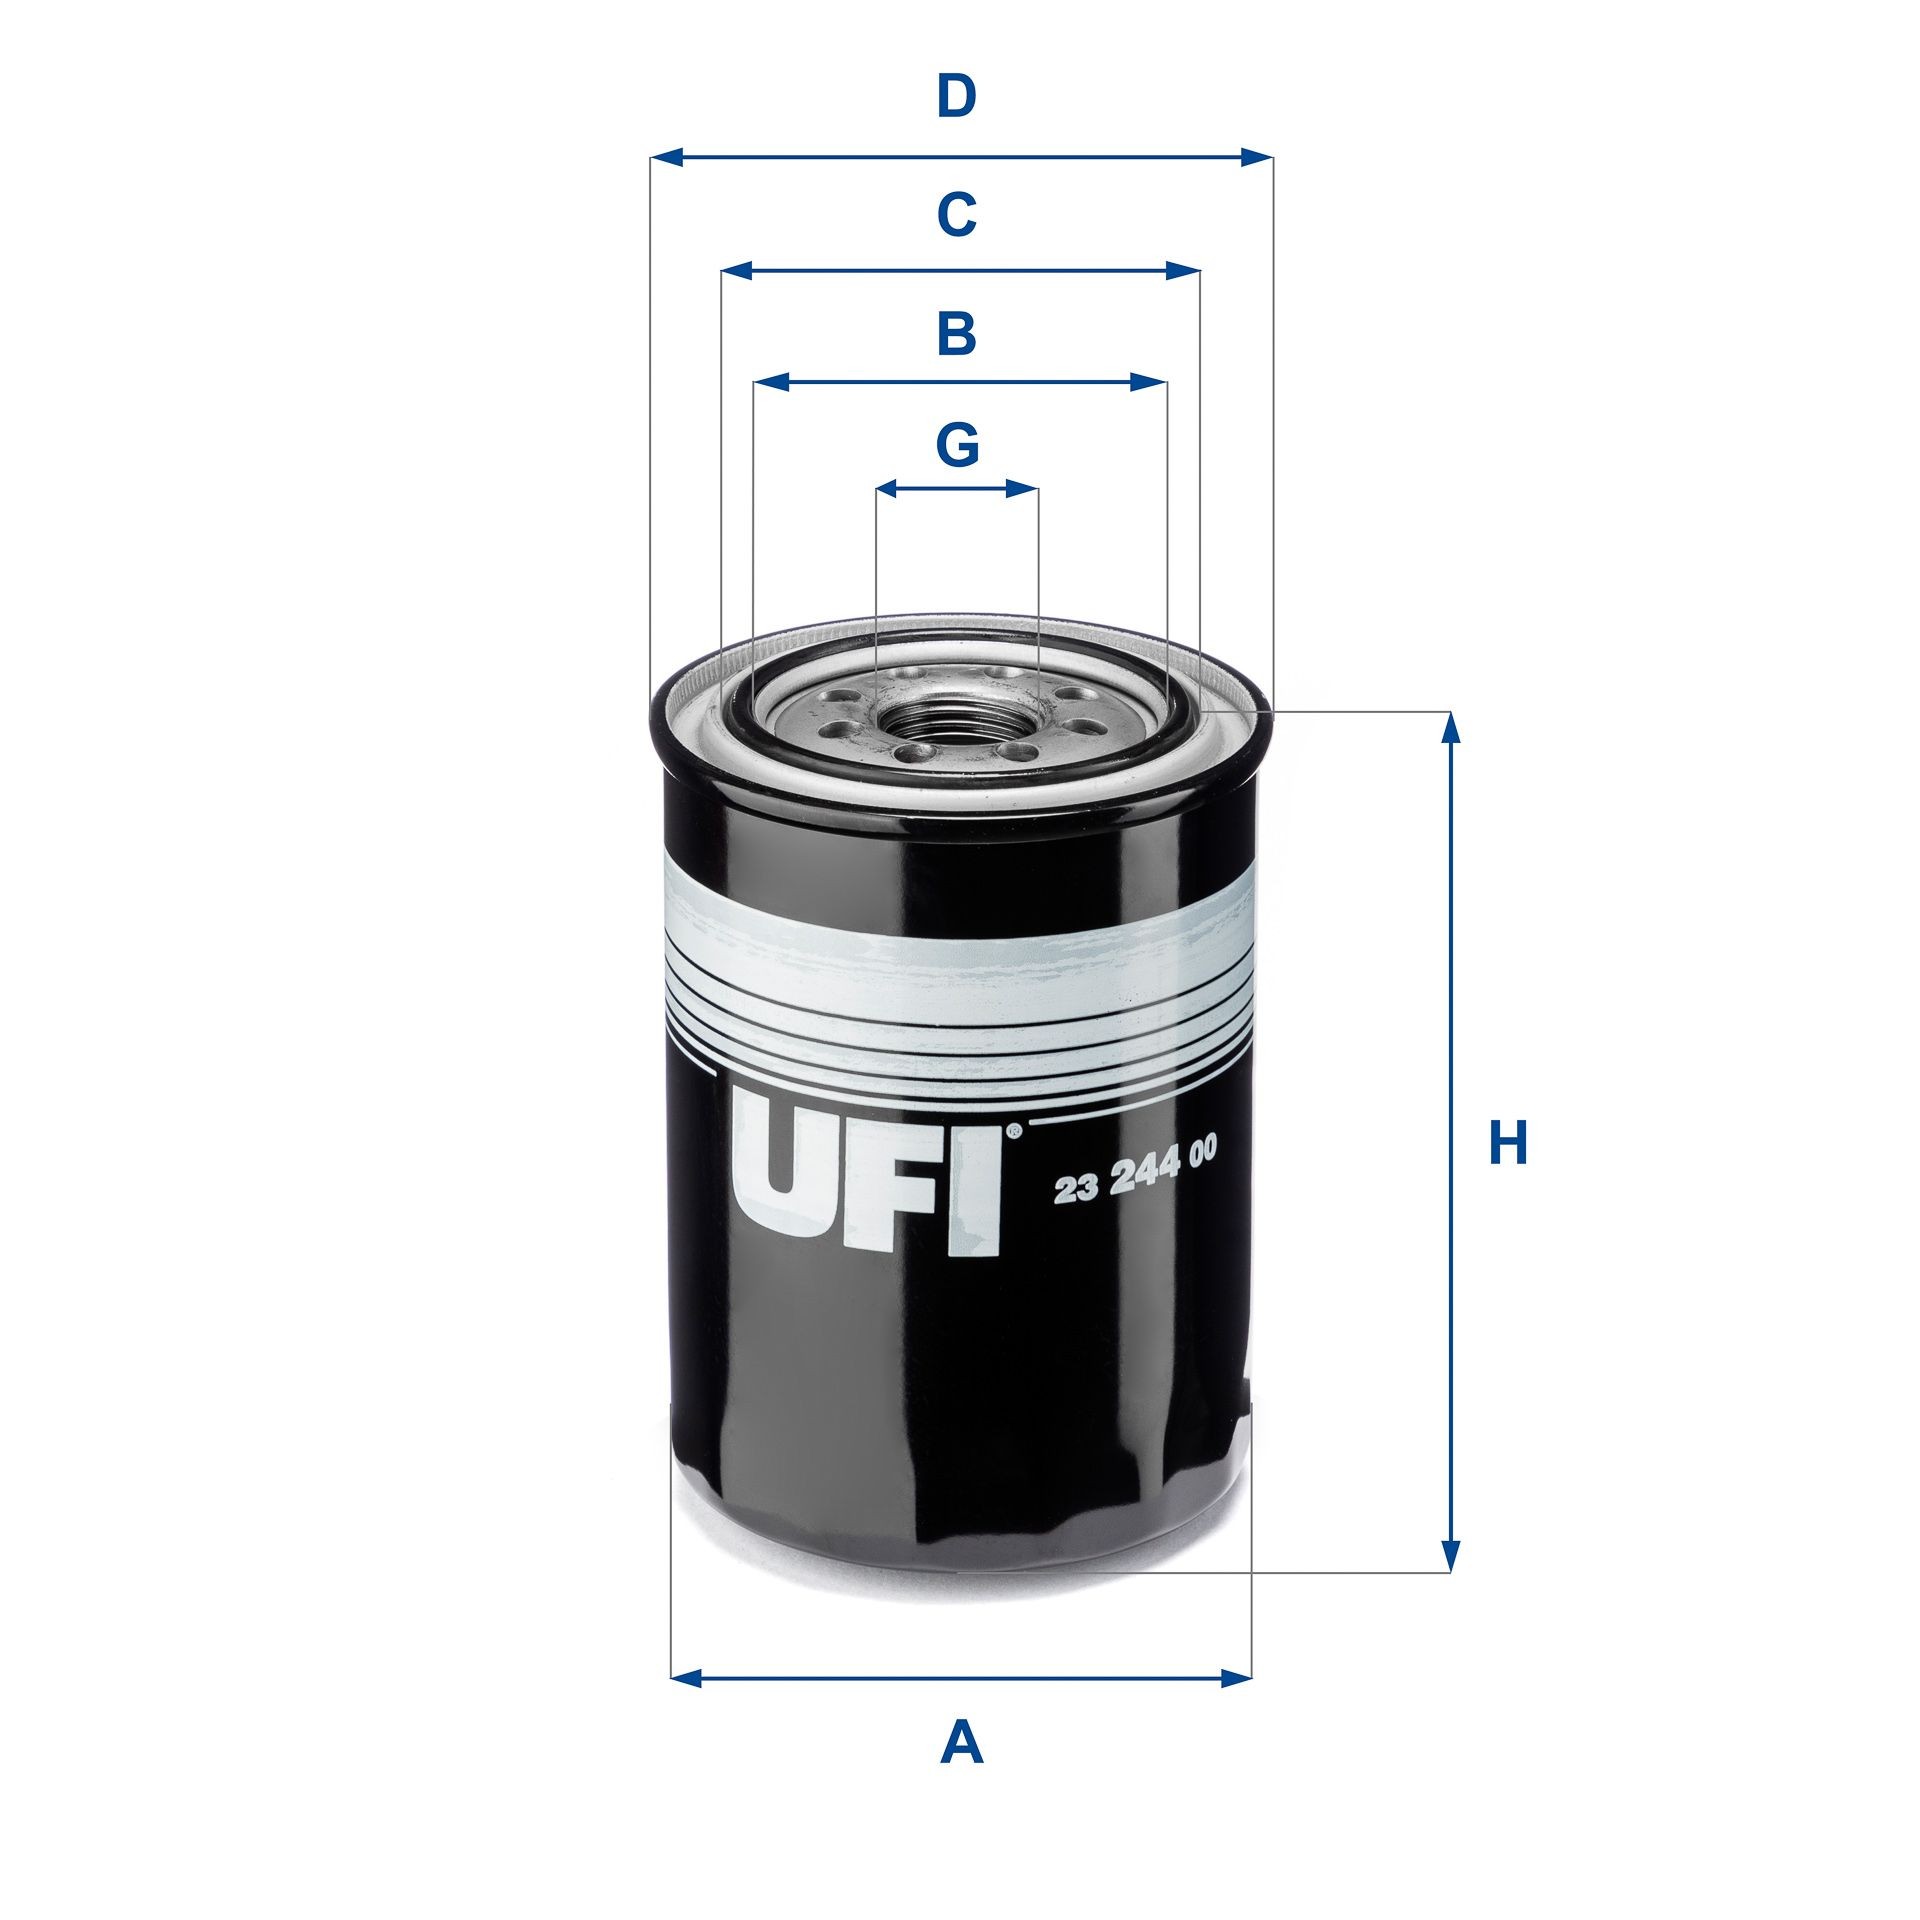 UFI 23.244.00 Oil filter 15208-40L02